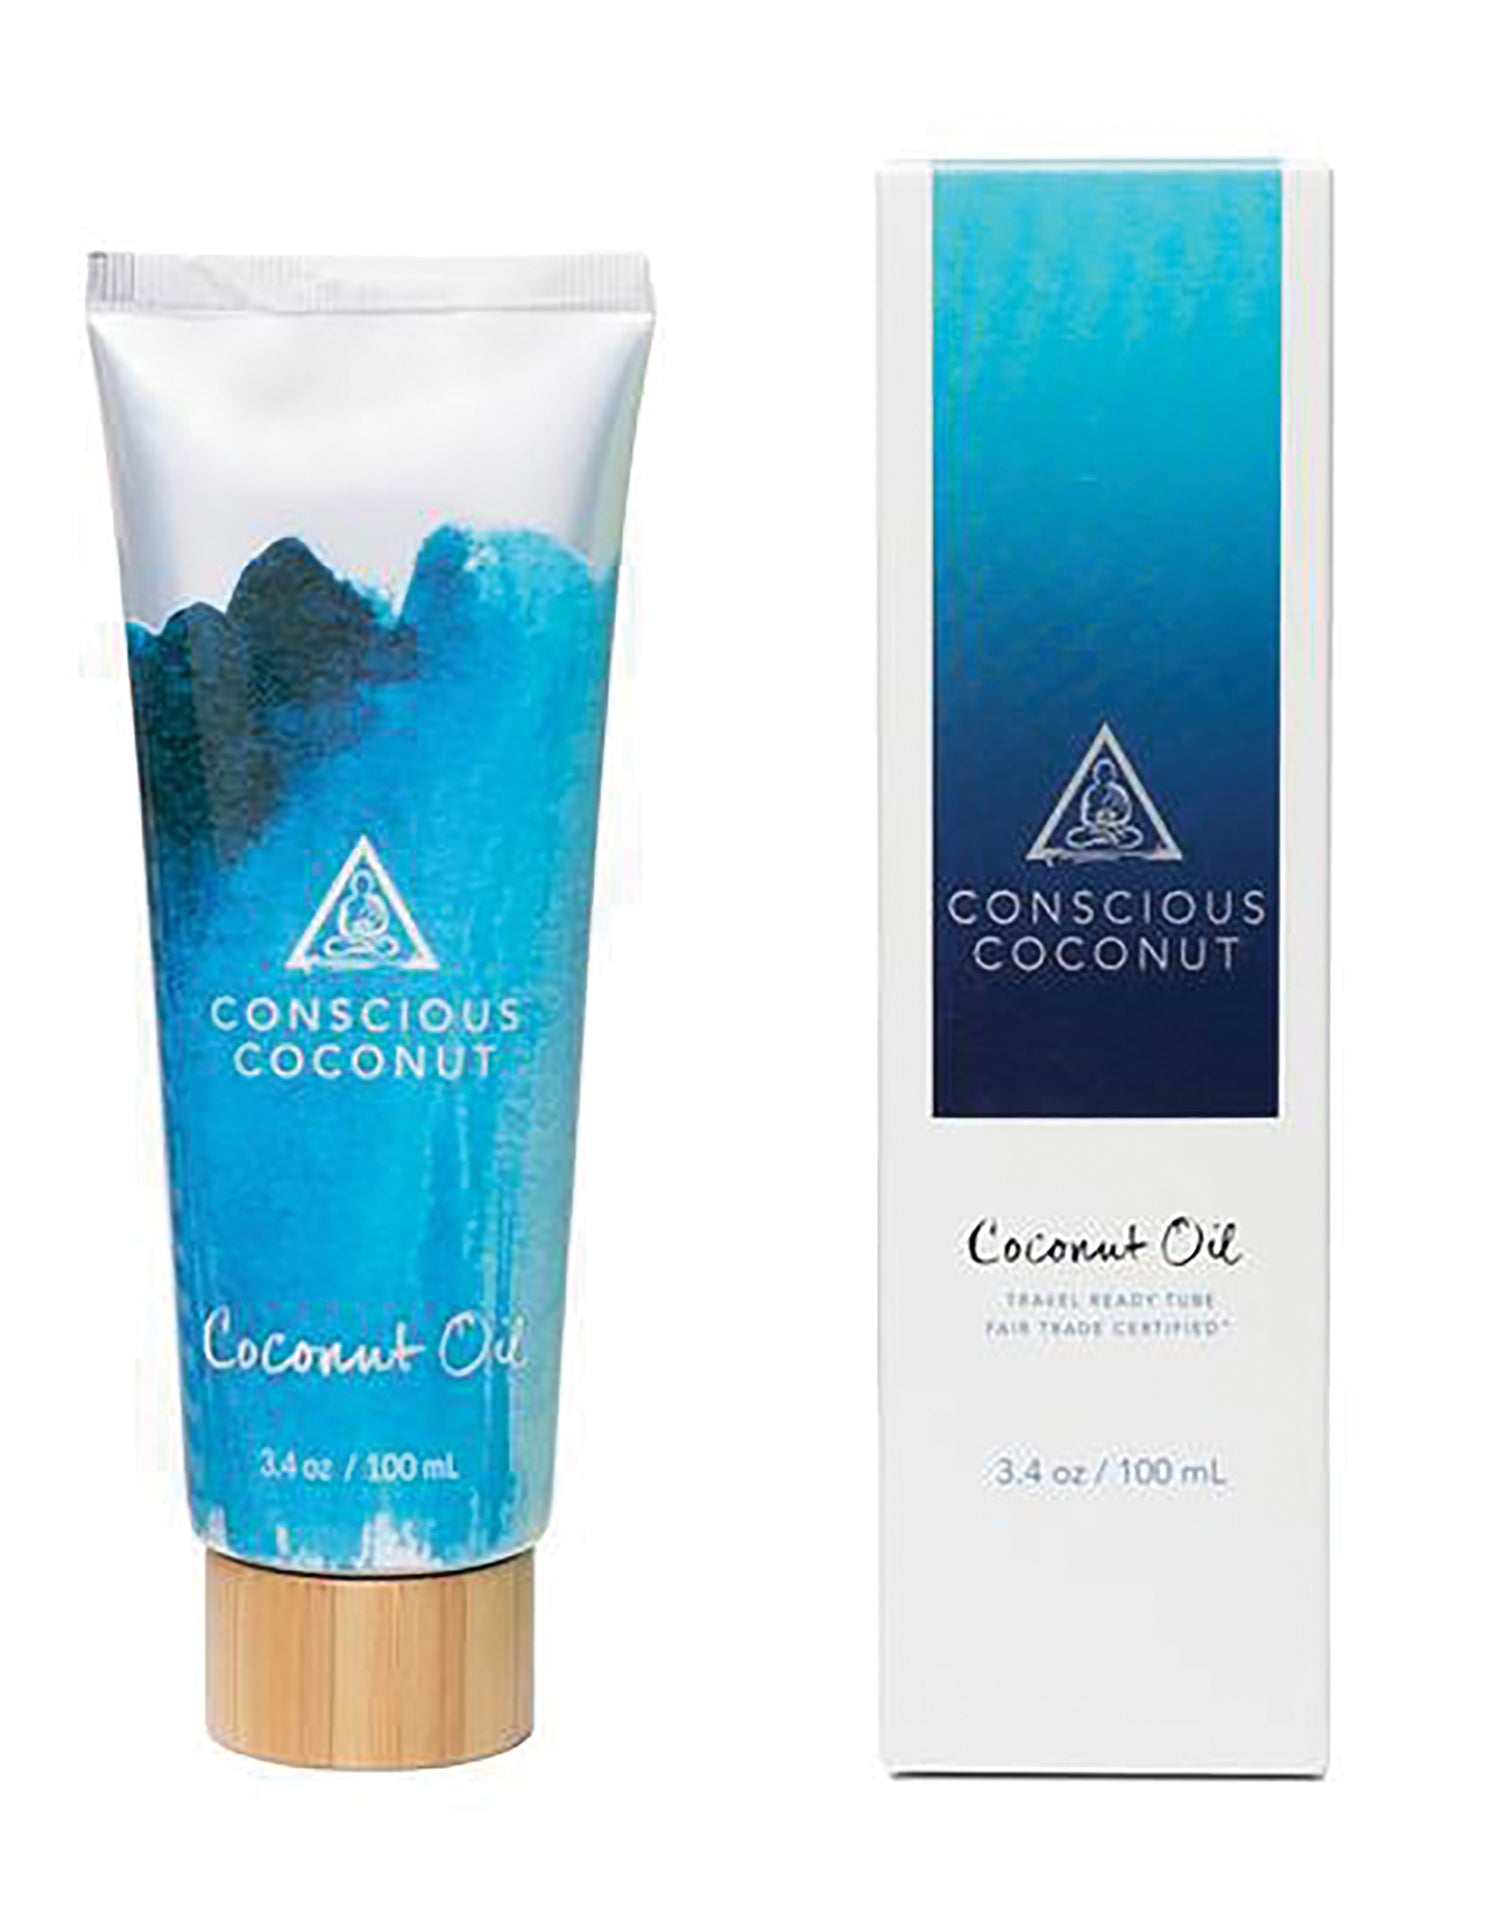 Conscious Coconut Oil 3.4oz - product view